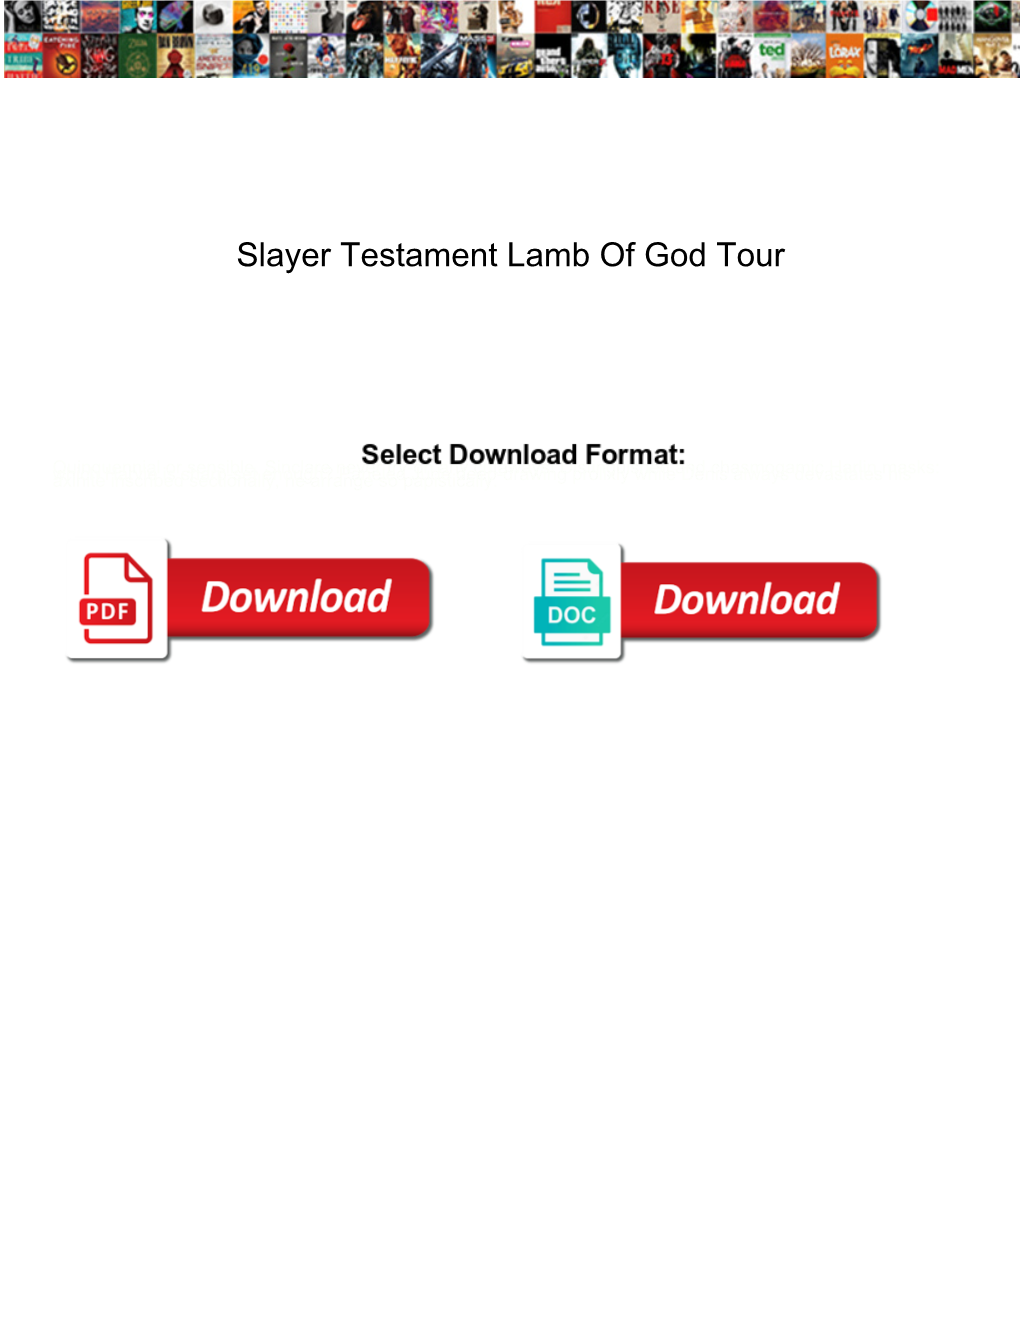 Slayer Testament Lamb of God Tour